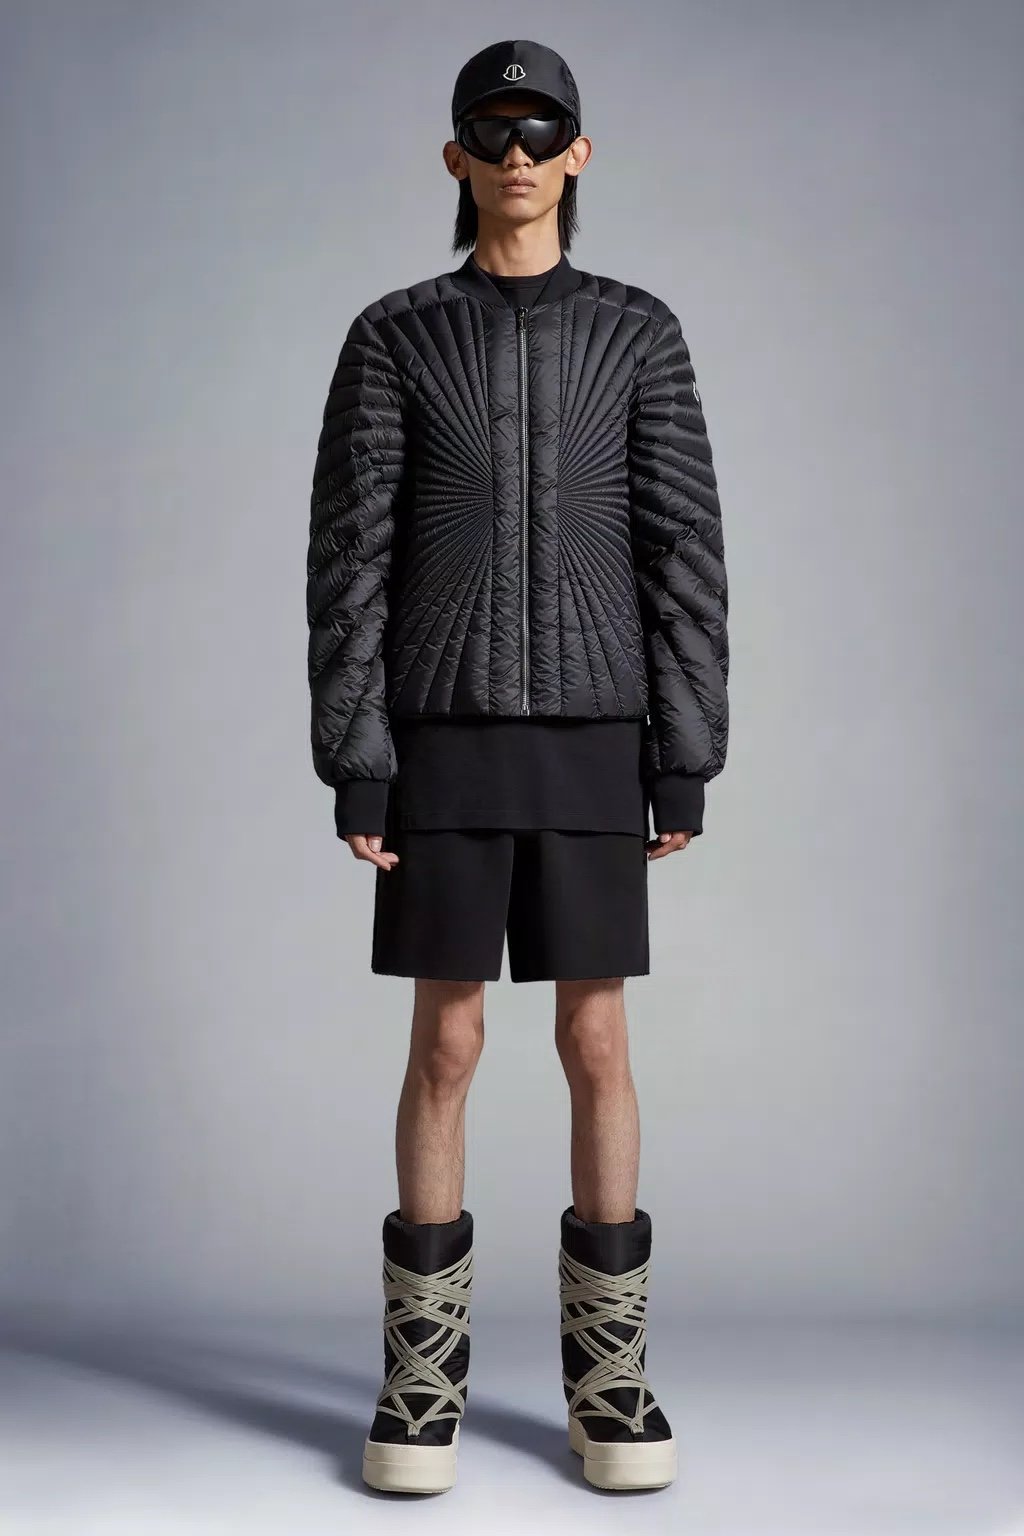 23Fw春夏moncler X rickowens联名合作系列多格羽绒外套东北旅游内里打底保暖外套。男女同款smlpljewjwsy20